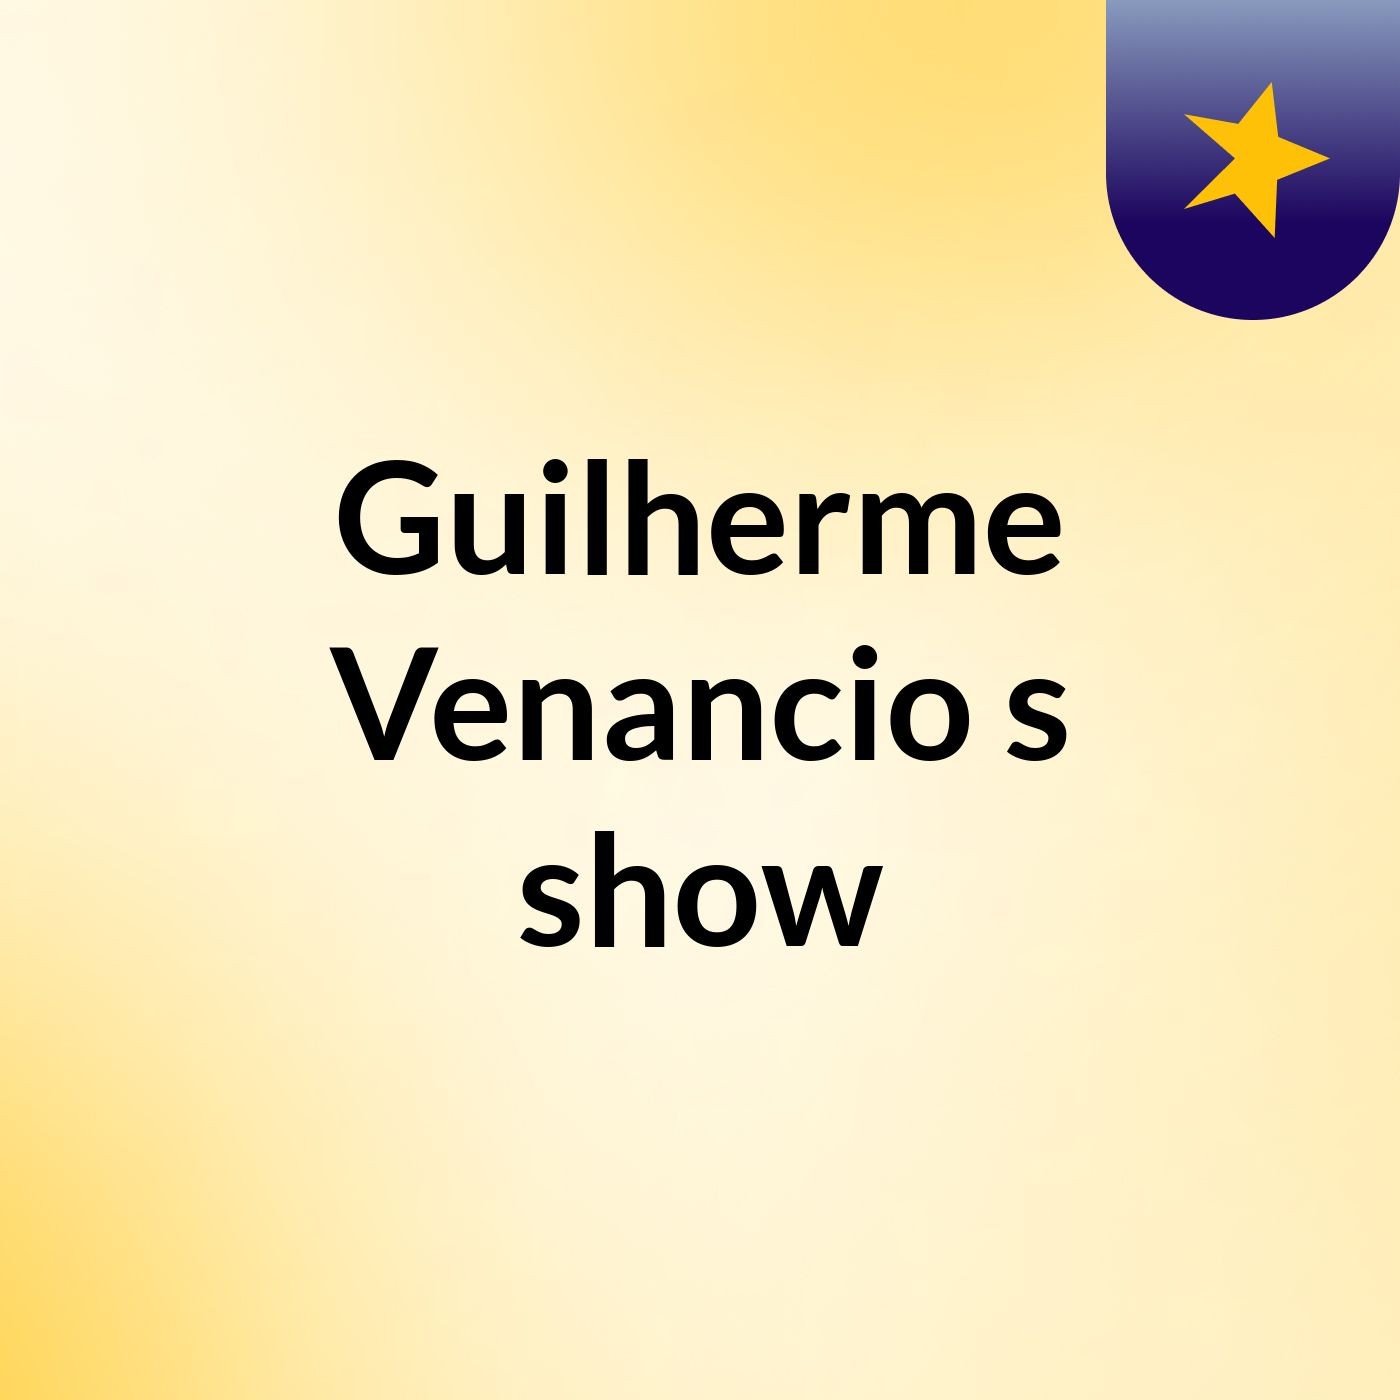 Guilherme Venancio's show